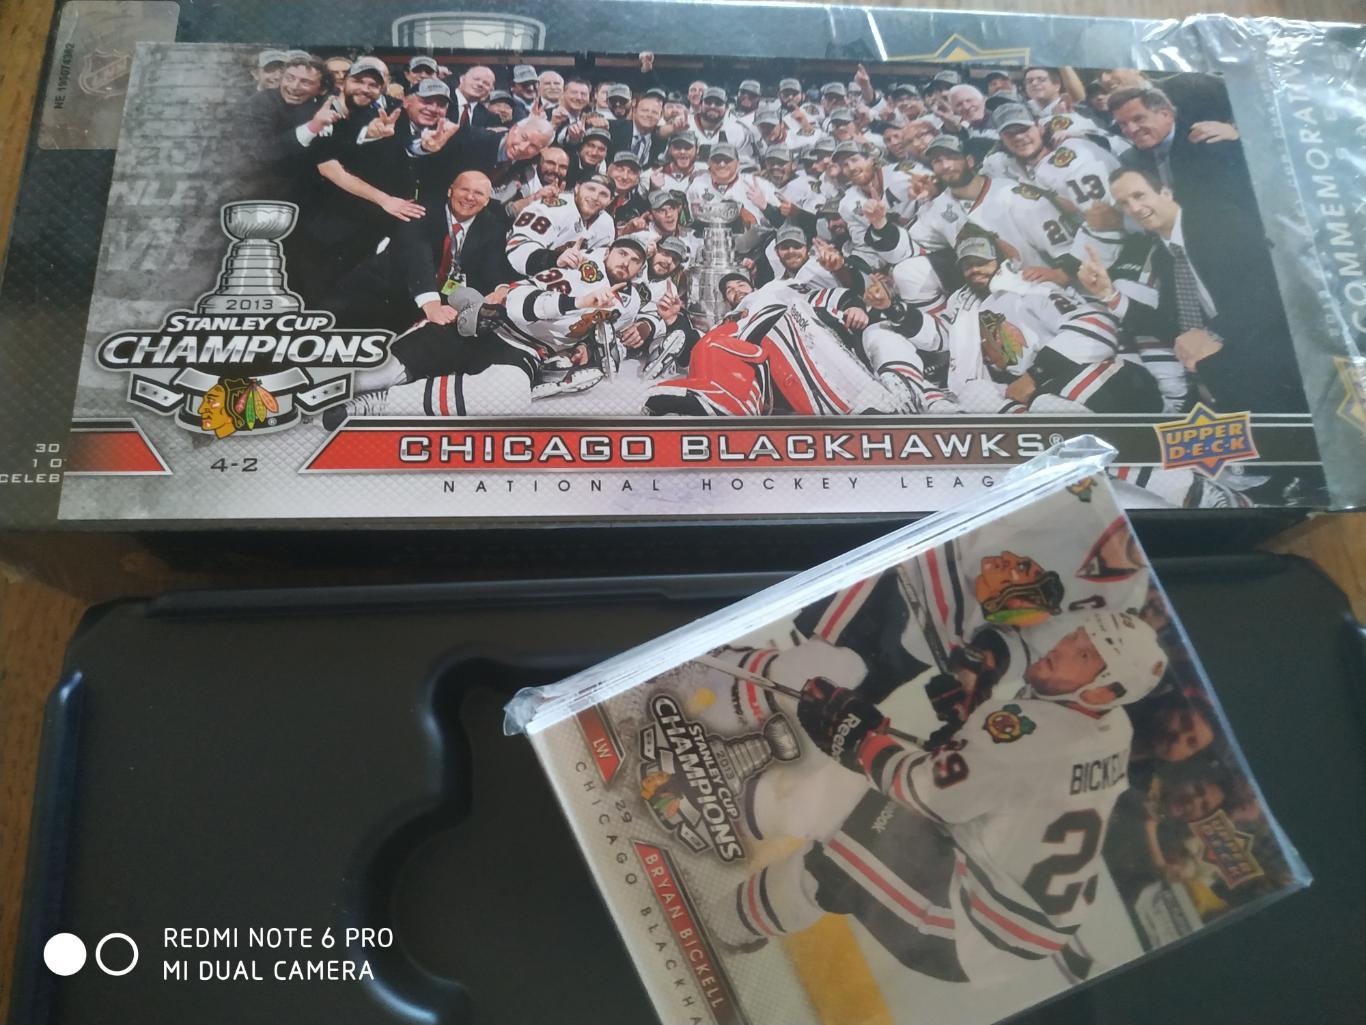 2013 CHICAGO BLACKHAWKS STANLEY CUP NHL UPPER DECK COMMEMORATIVE BOX SET 30+1 2